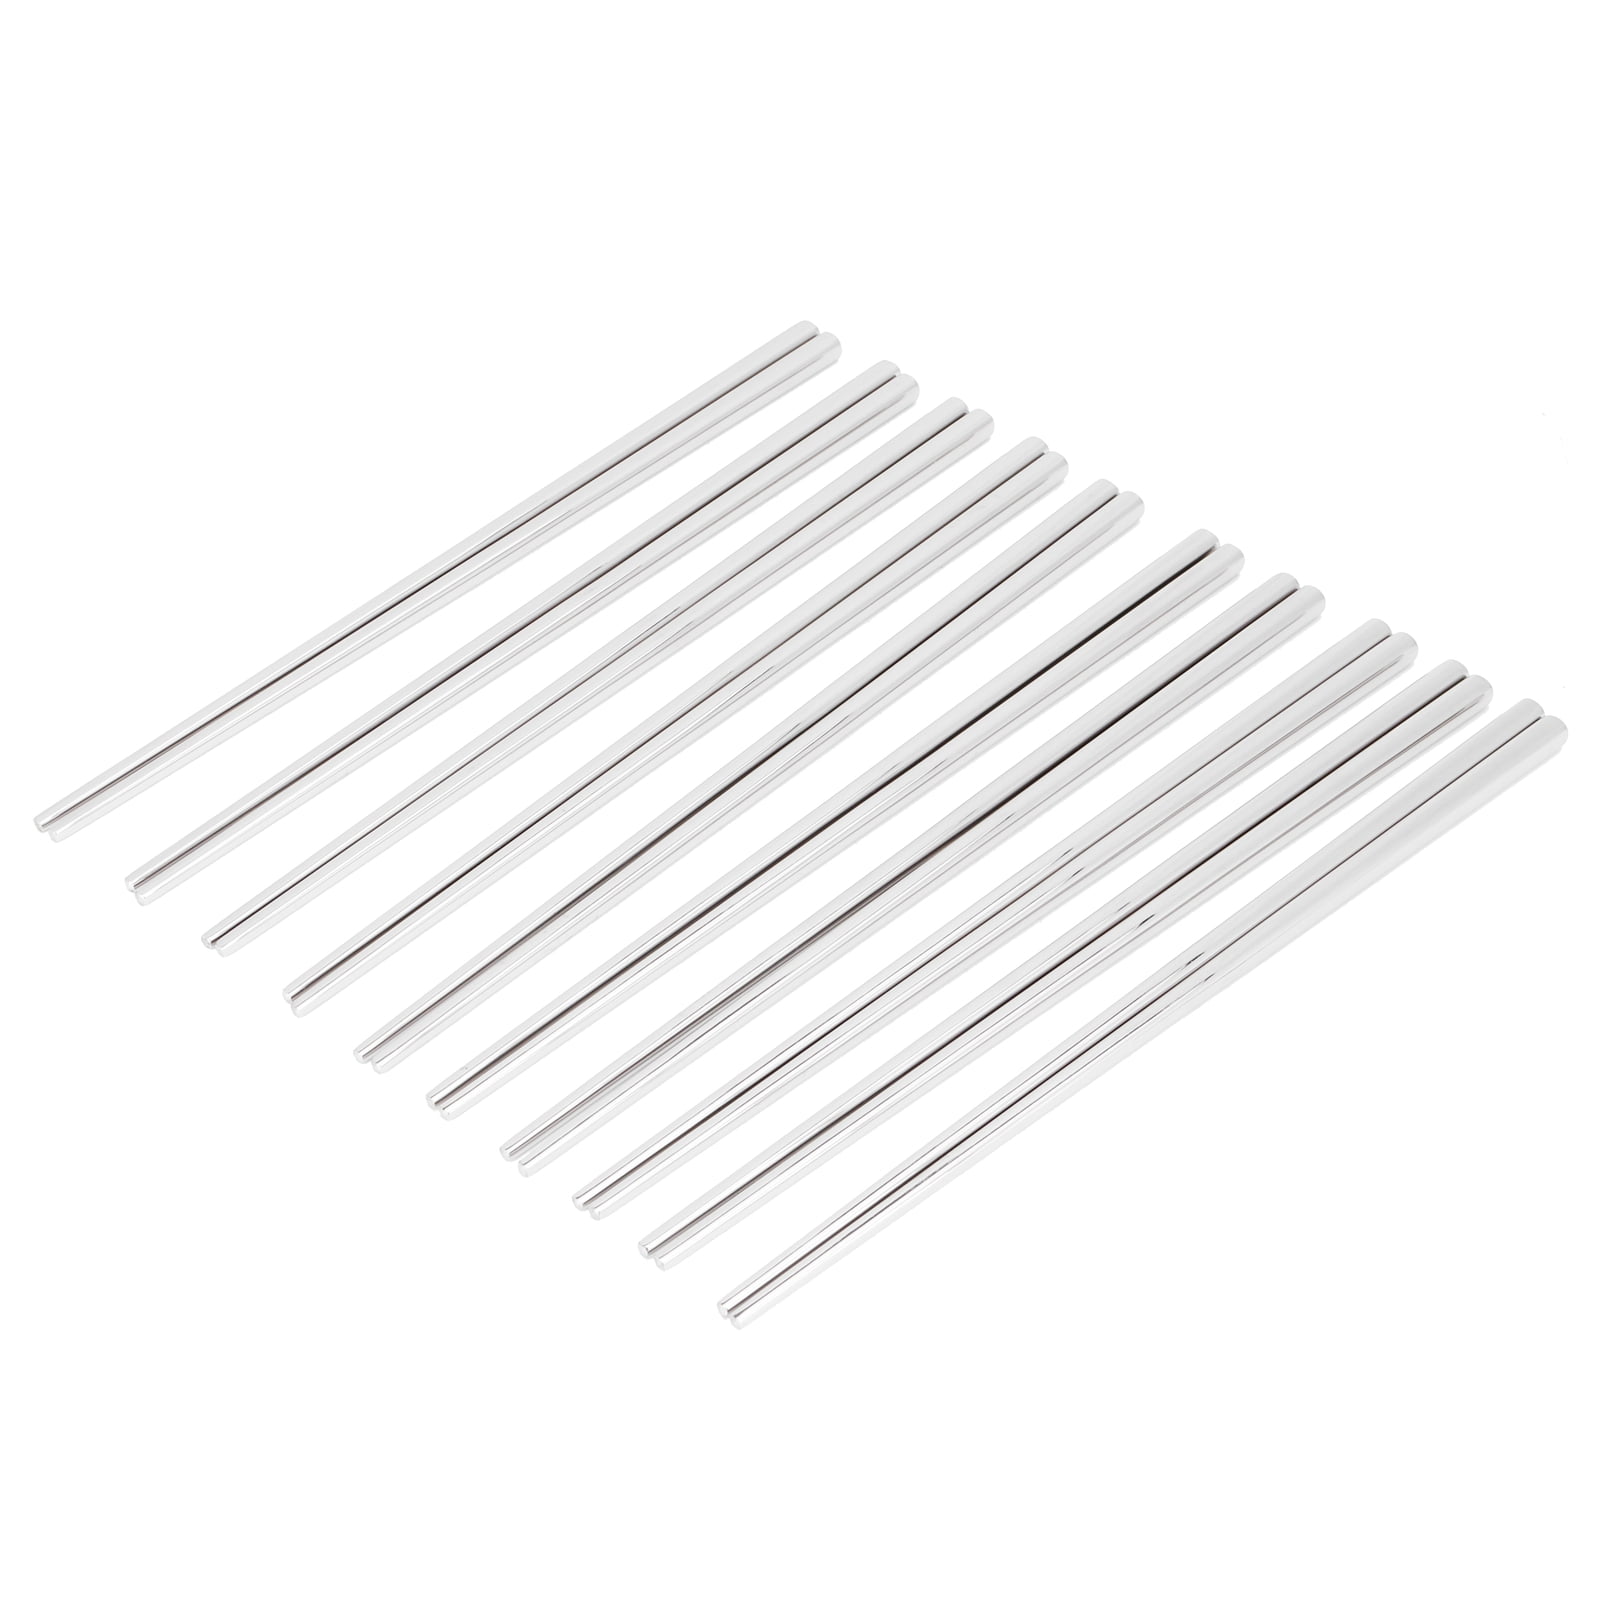 x 6 pairs Spoon & Chopsticks Korean Stainless Steel Fine Quality Check shape 